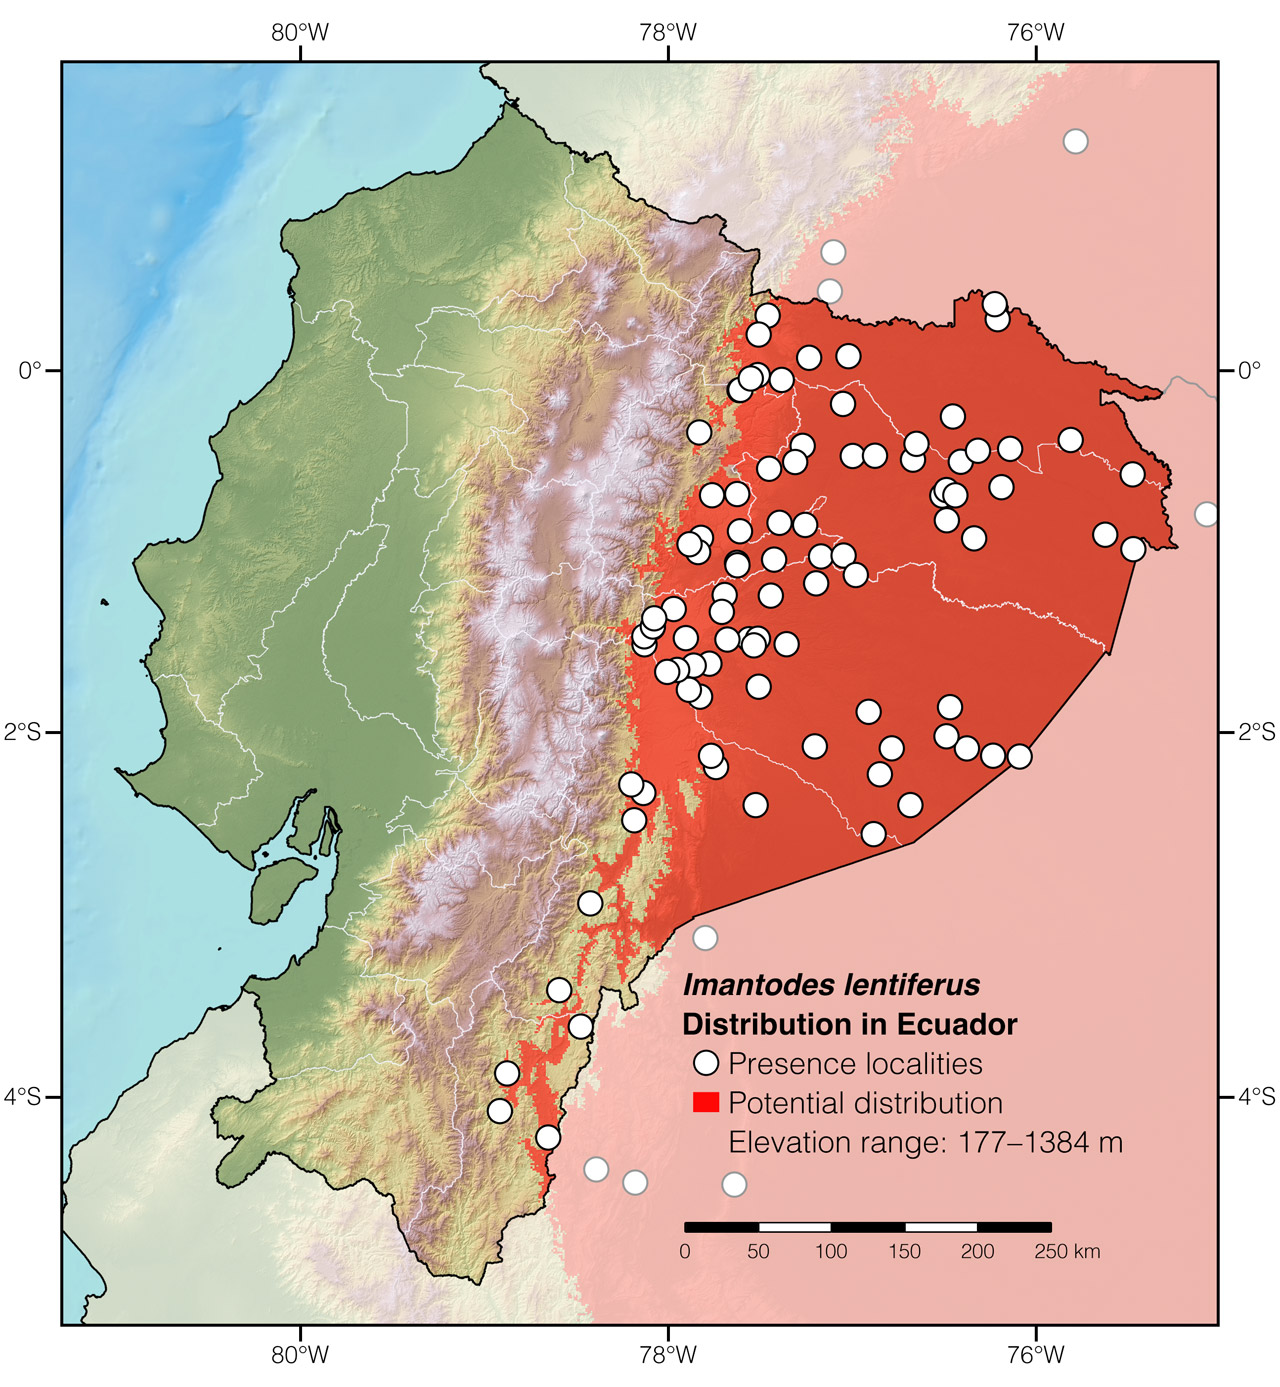 Distribution of Imantodes lentiferus in Ecuador